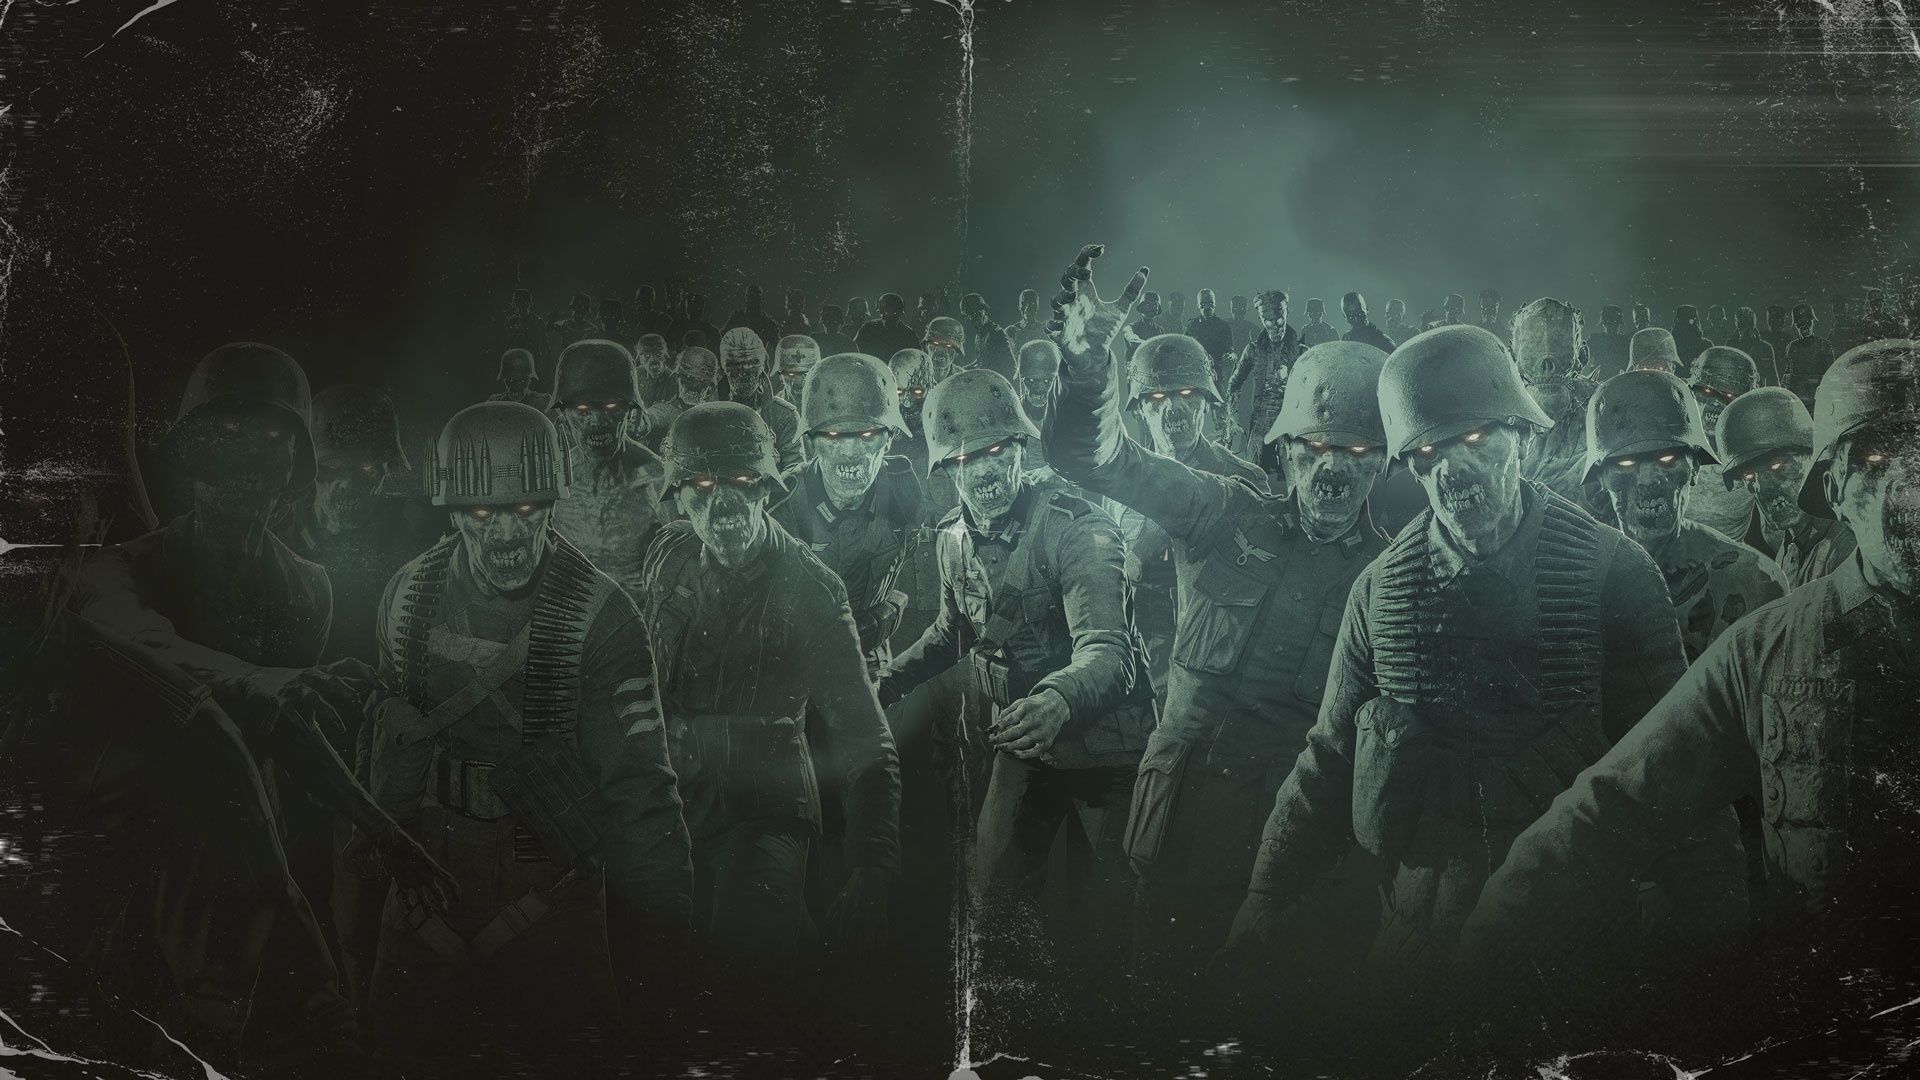 Zombie Army 4: Dead War Wallpapers